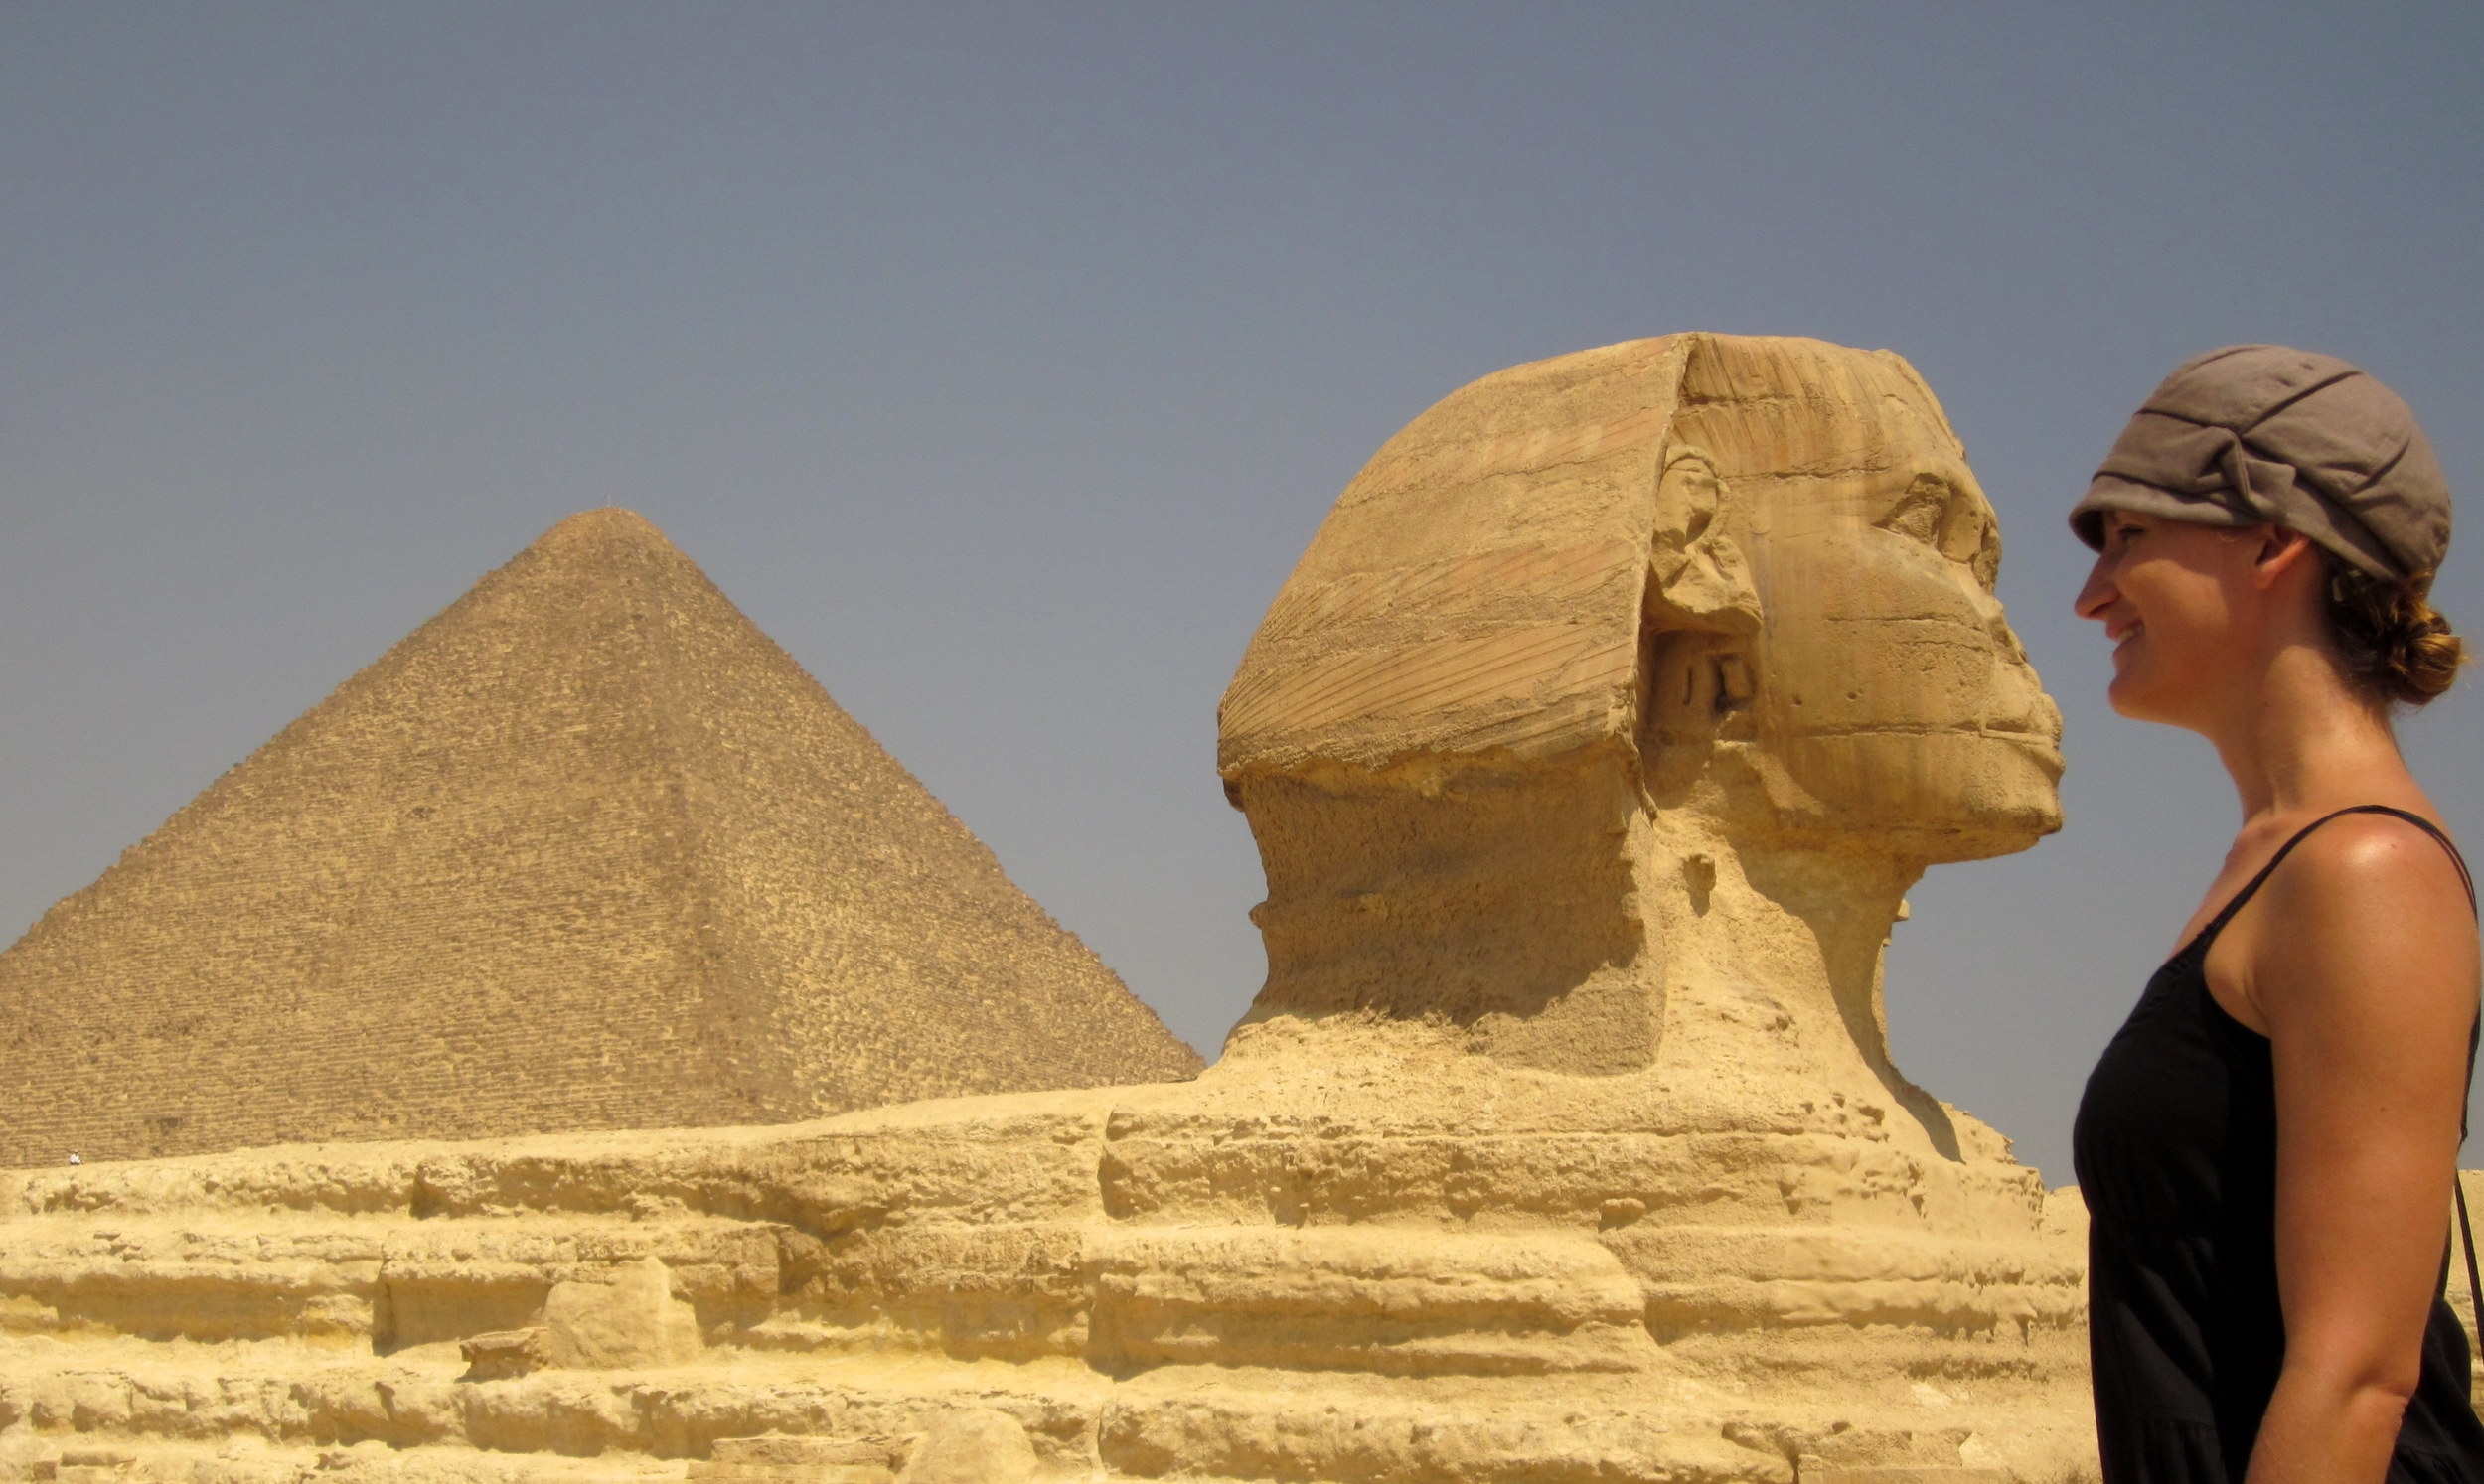 Sphinx in Giza, Egypt